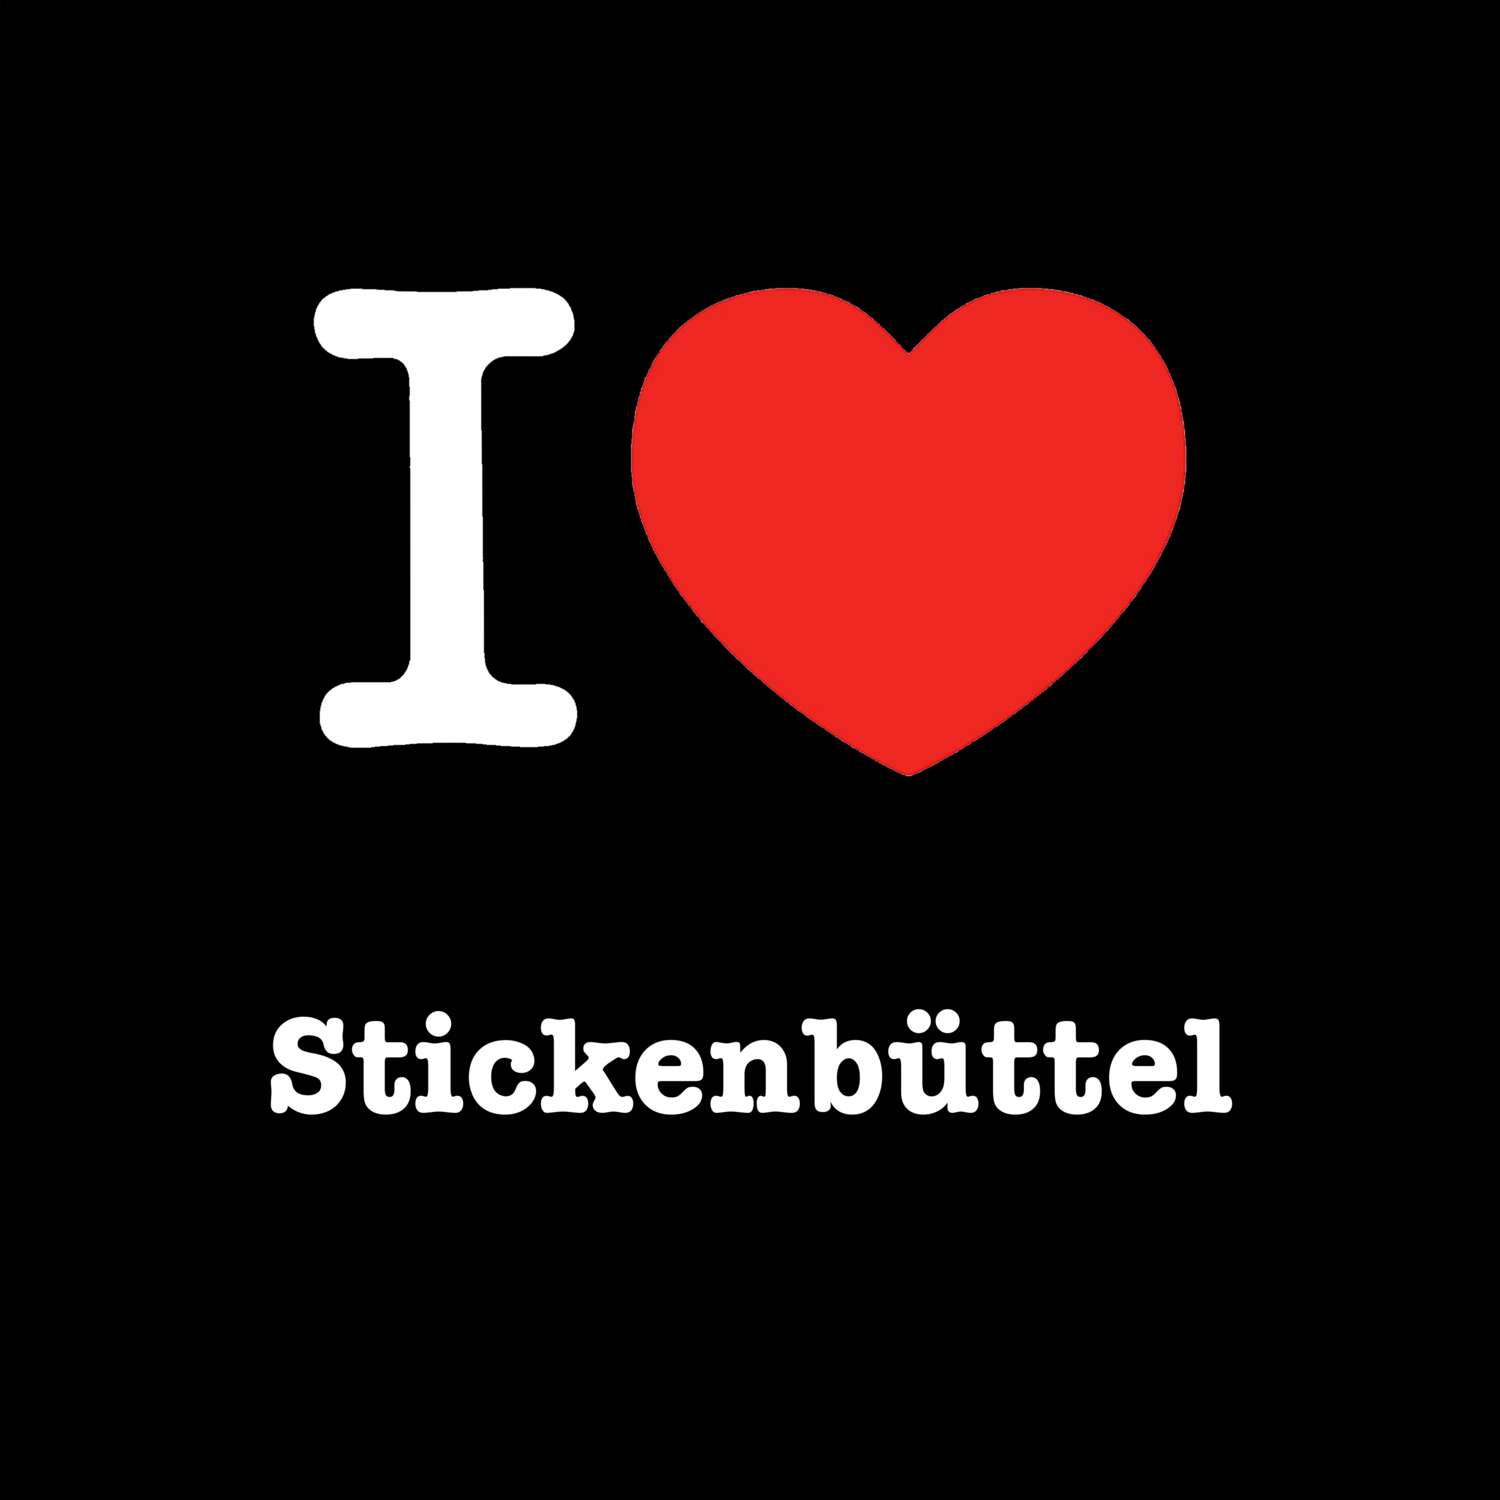 Stickenbüttel T-Shirt »I love«